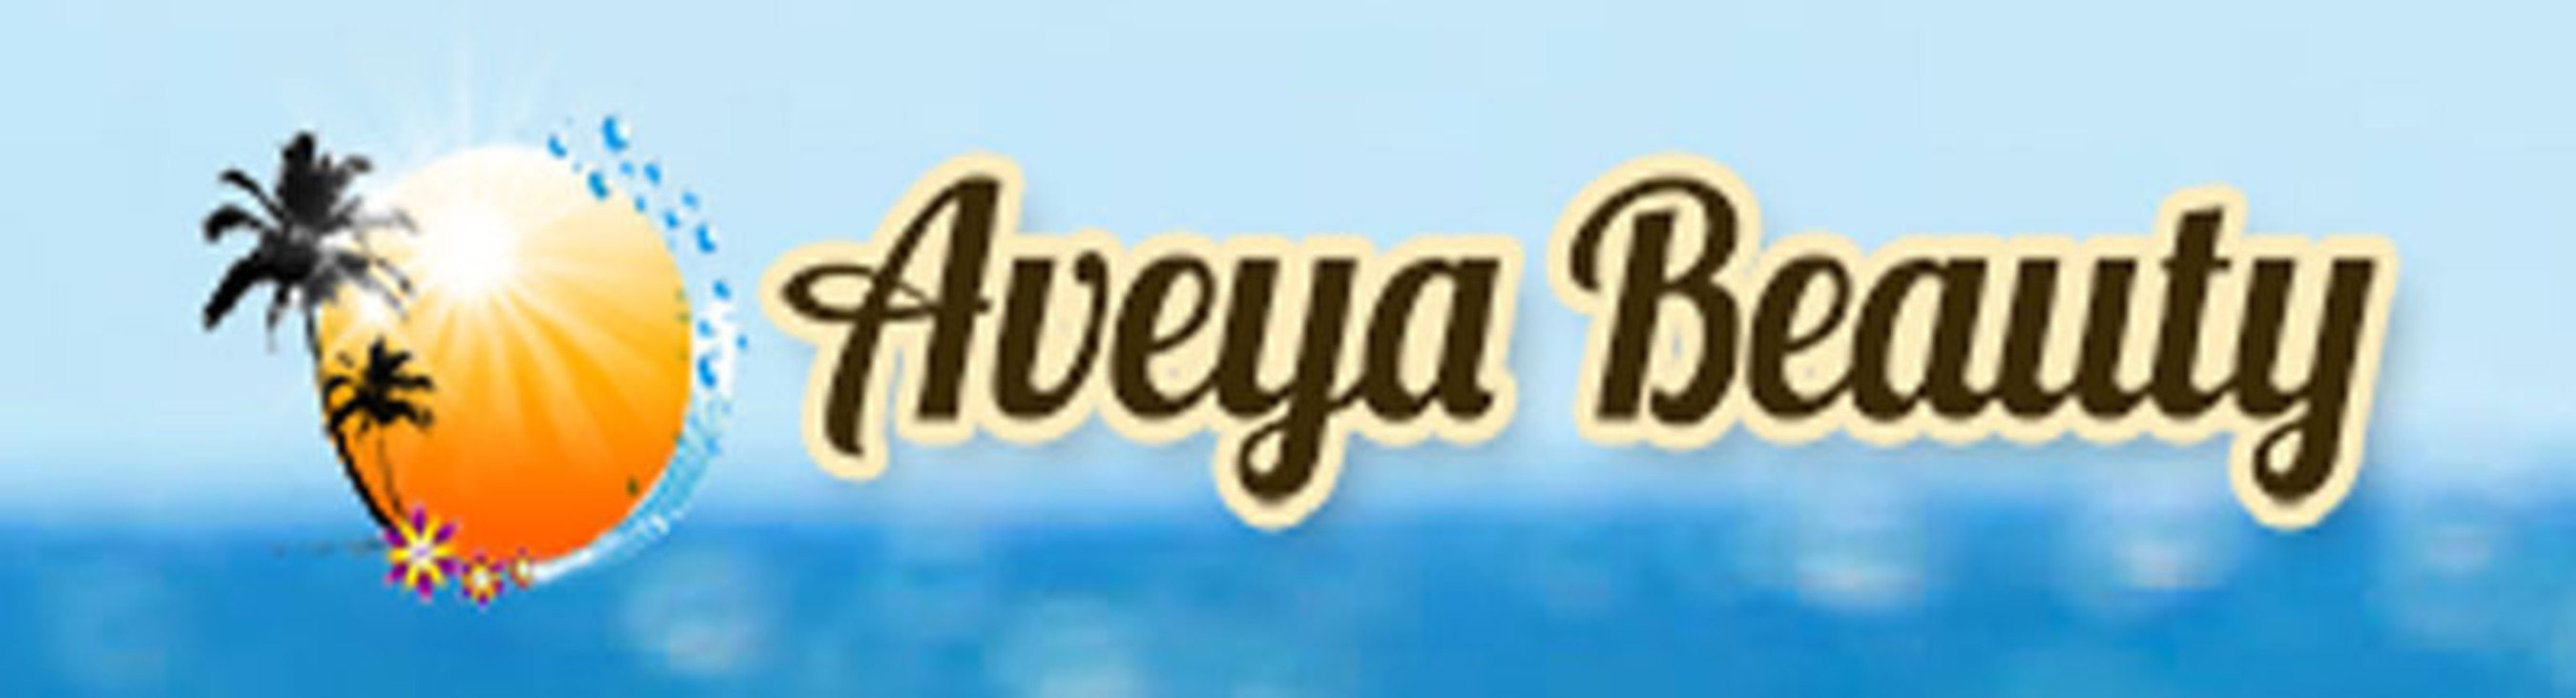 Aveya Beauty Logo. (PRNewsFoto/Aveya Beauty) (PRNewsFoto/AVEYA BEAUTY)